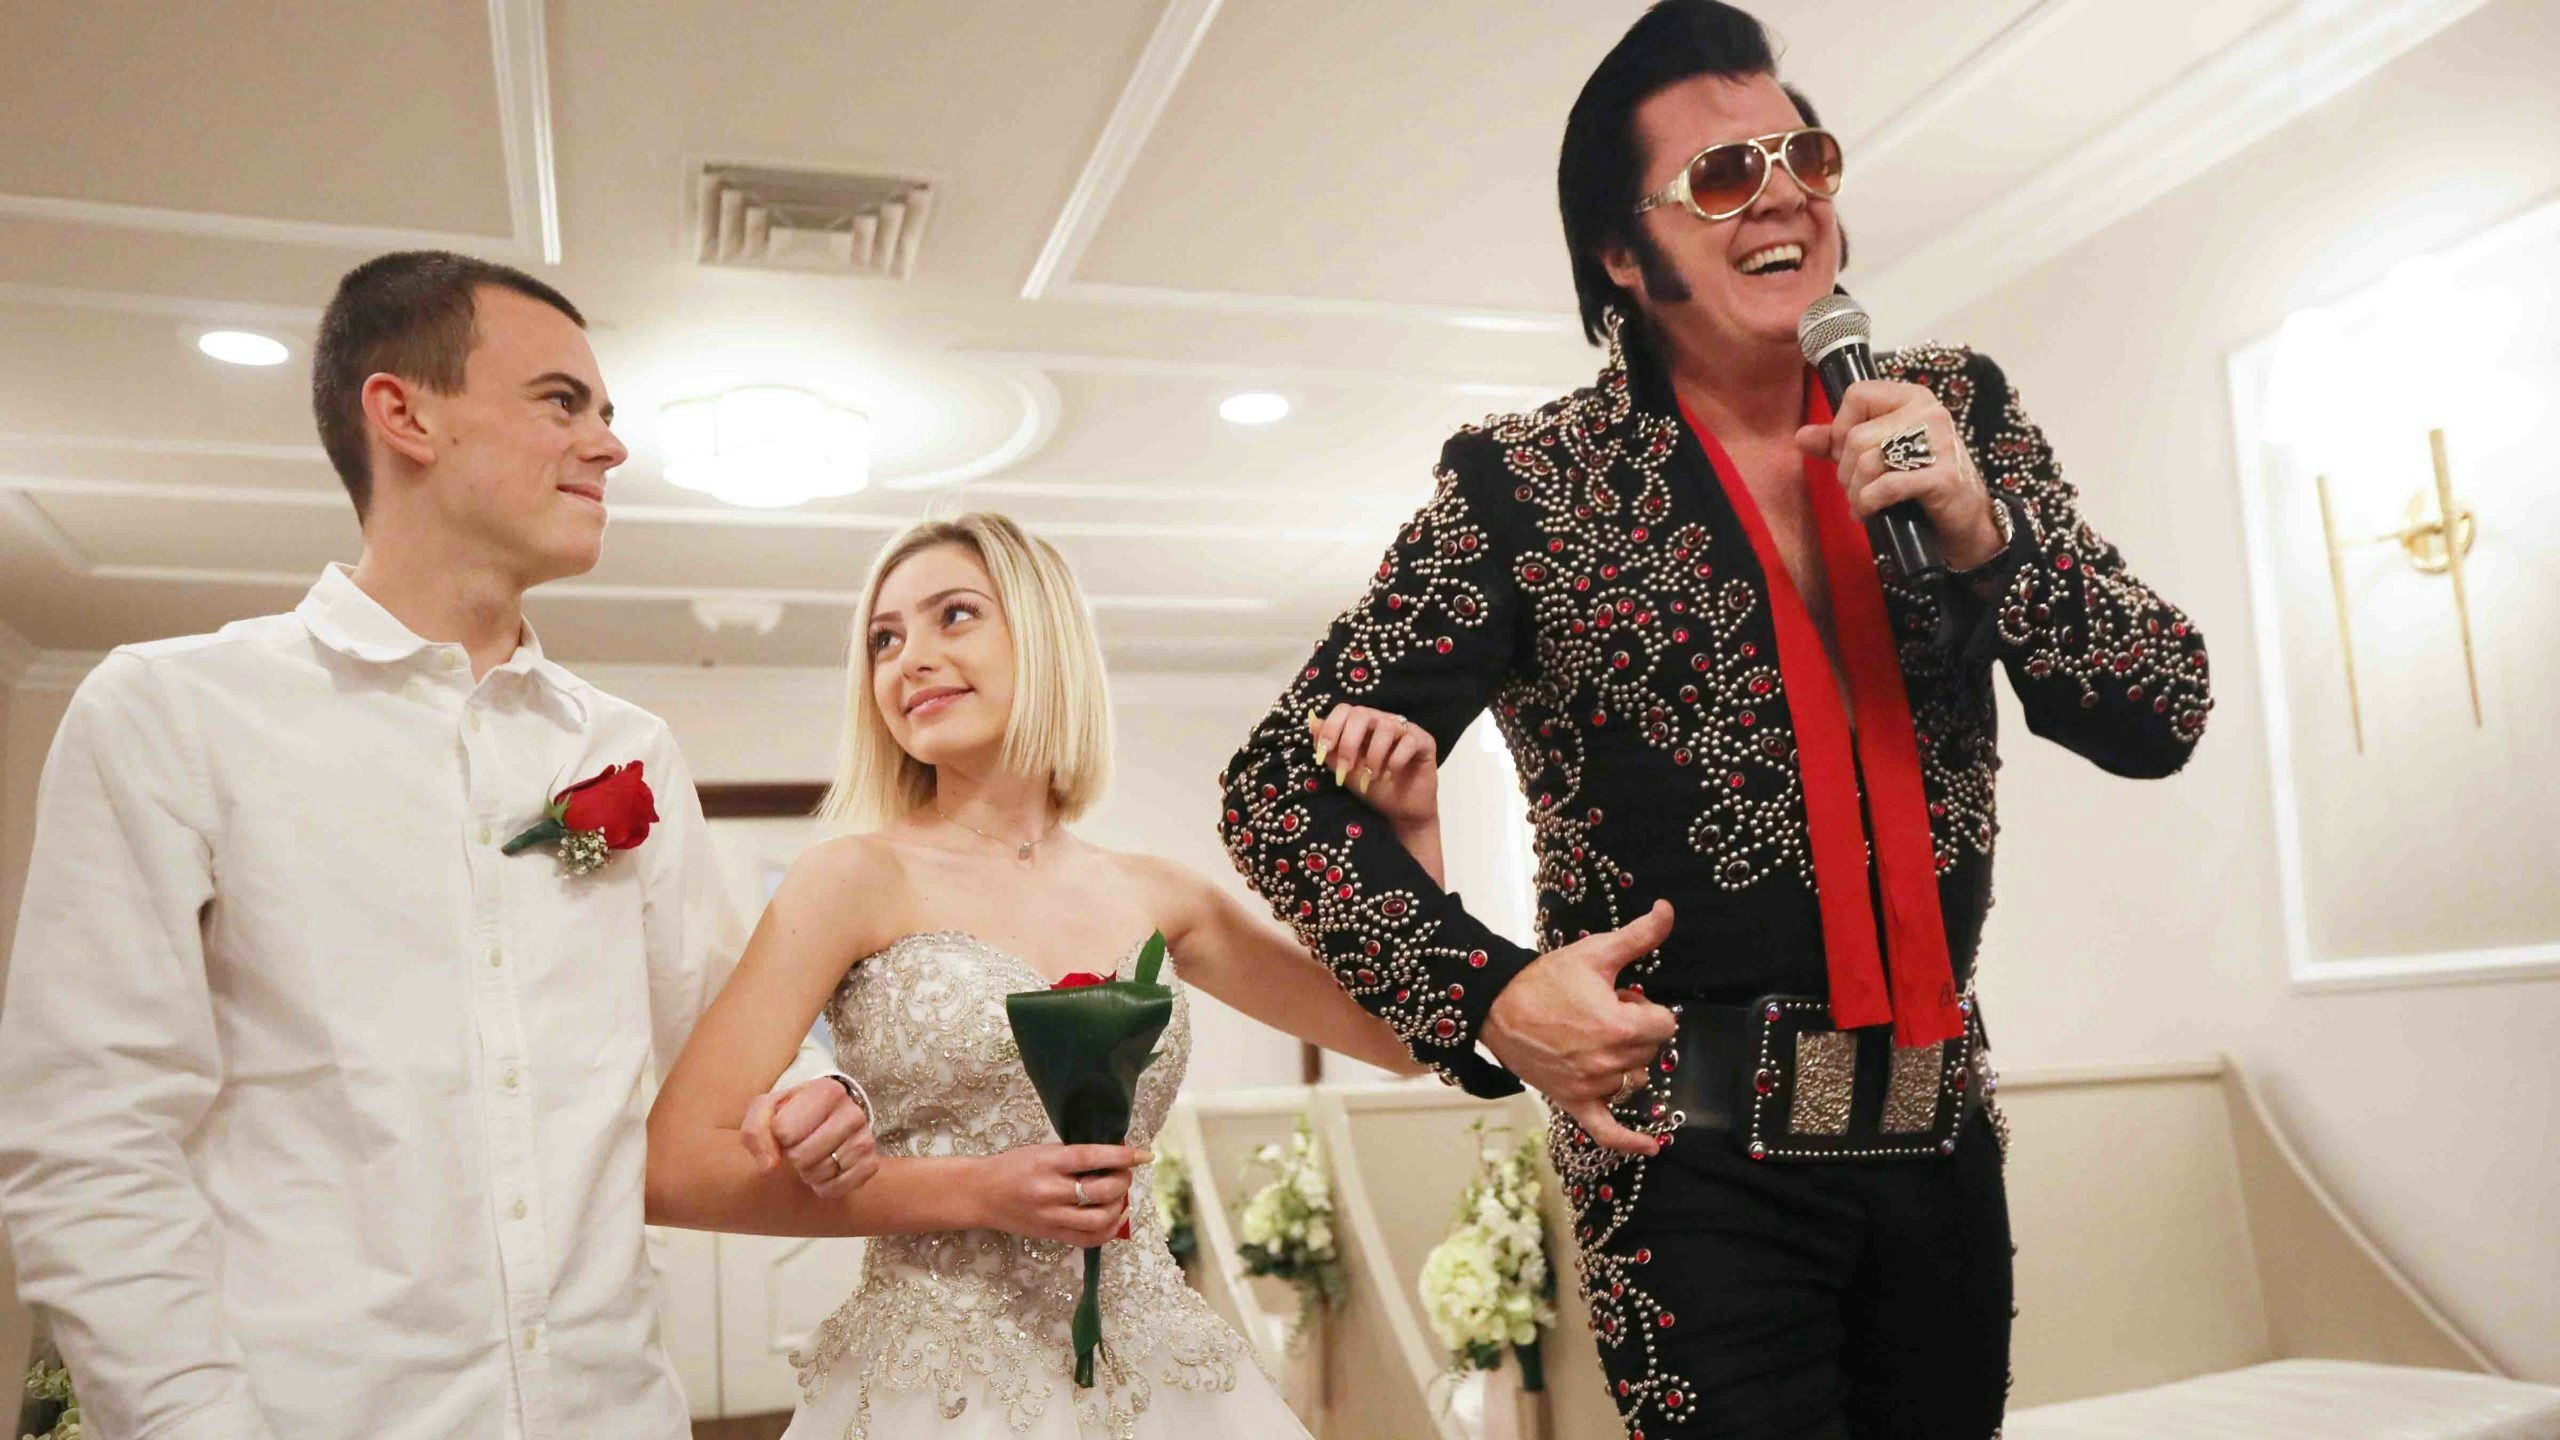 Elvis wedding 3 30 22 scaled